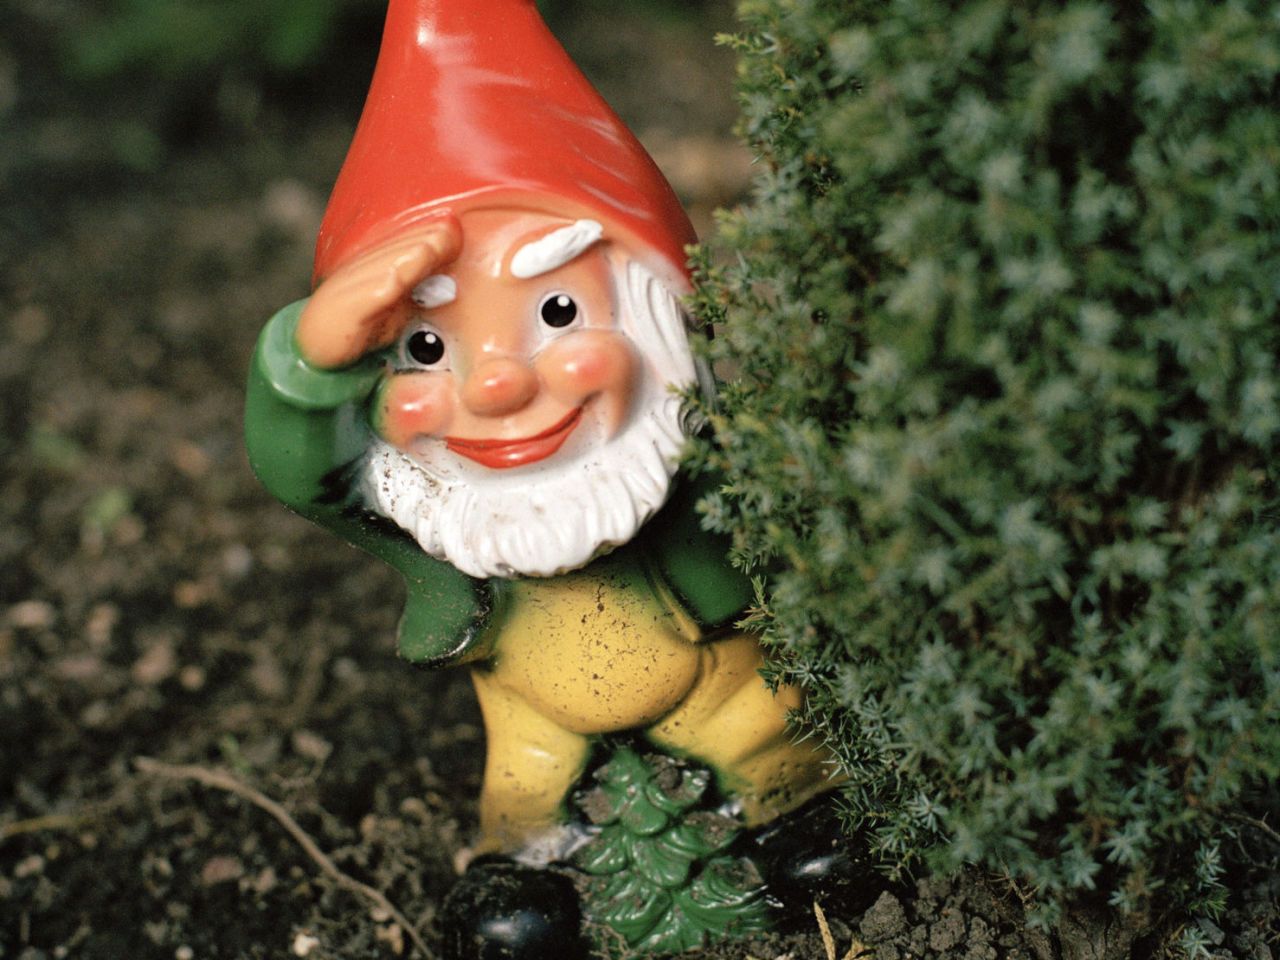 21 Best Garden Ornaments - Cheap Lawn Ornaments & Sculptures for Gardens